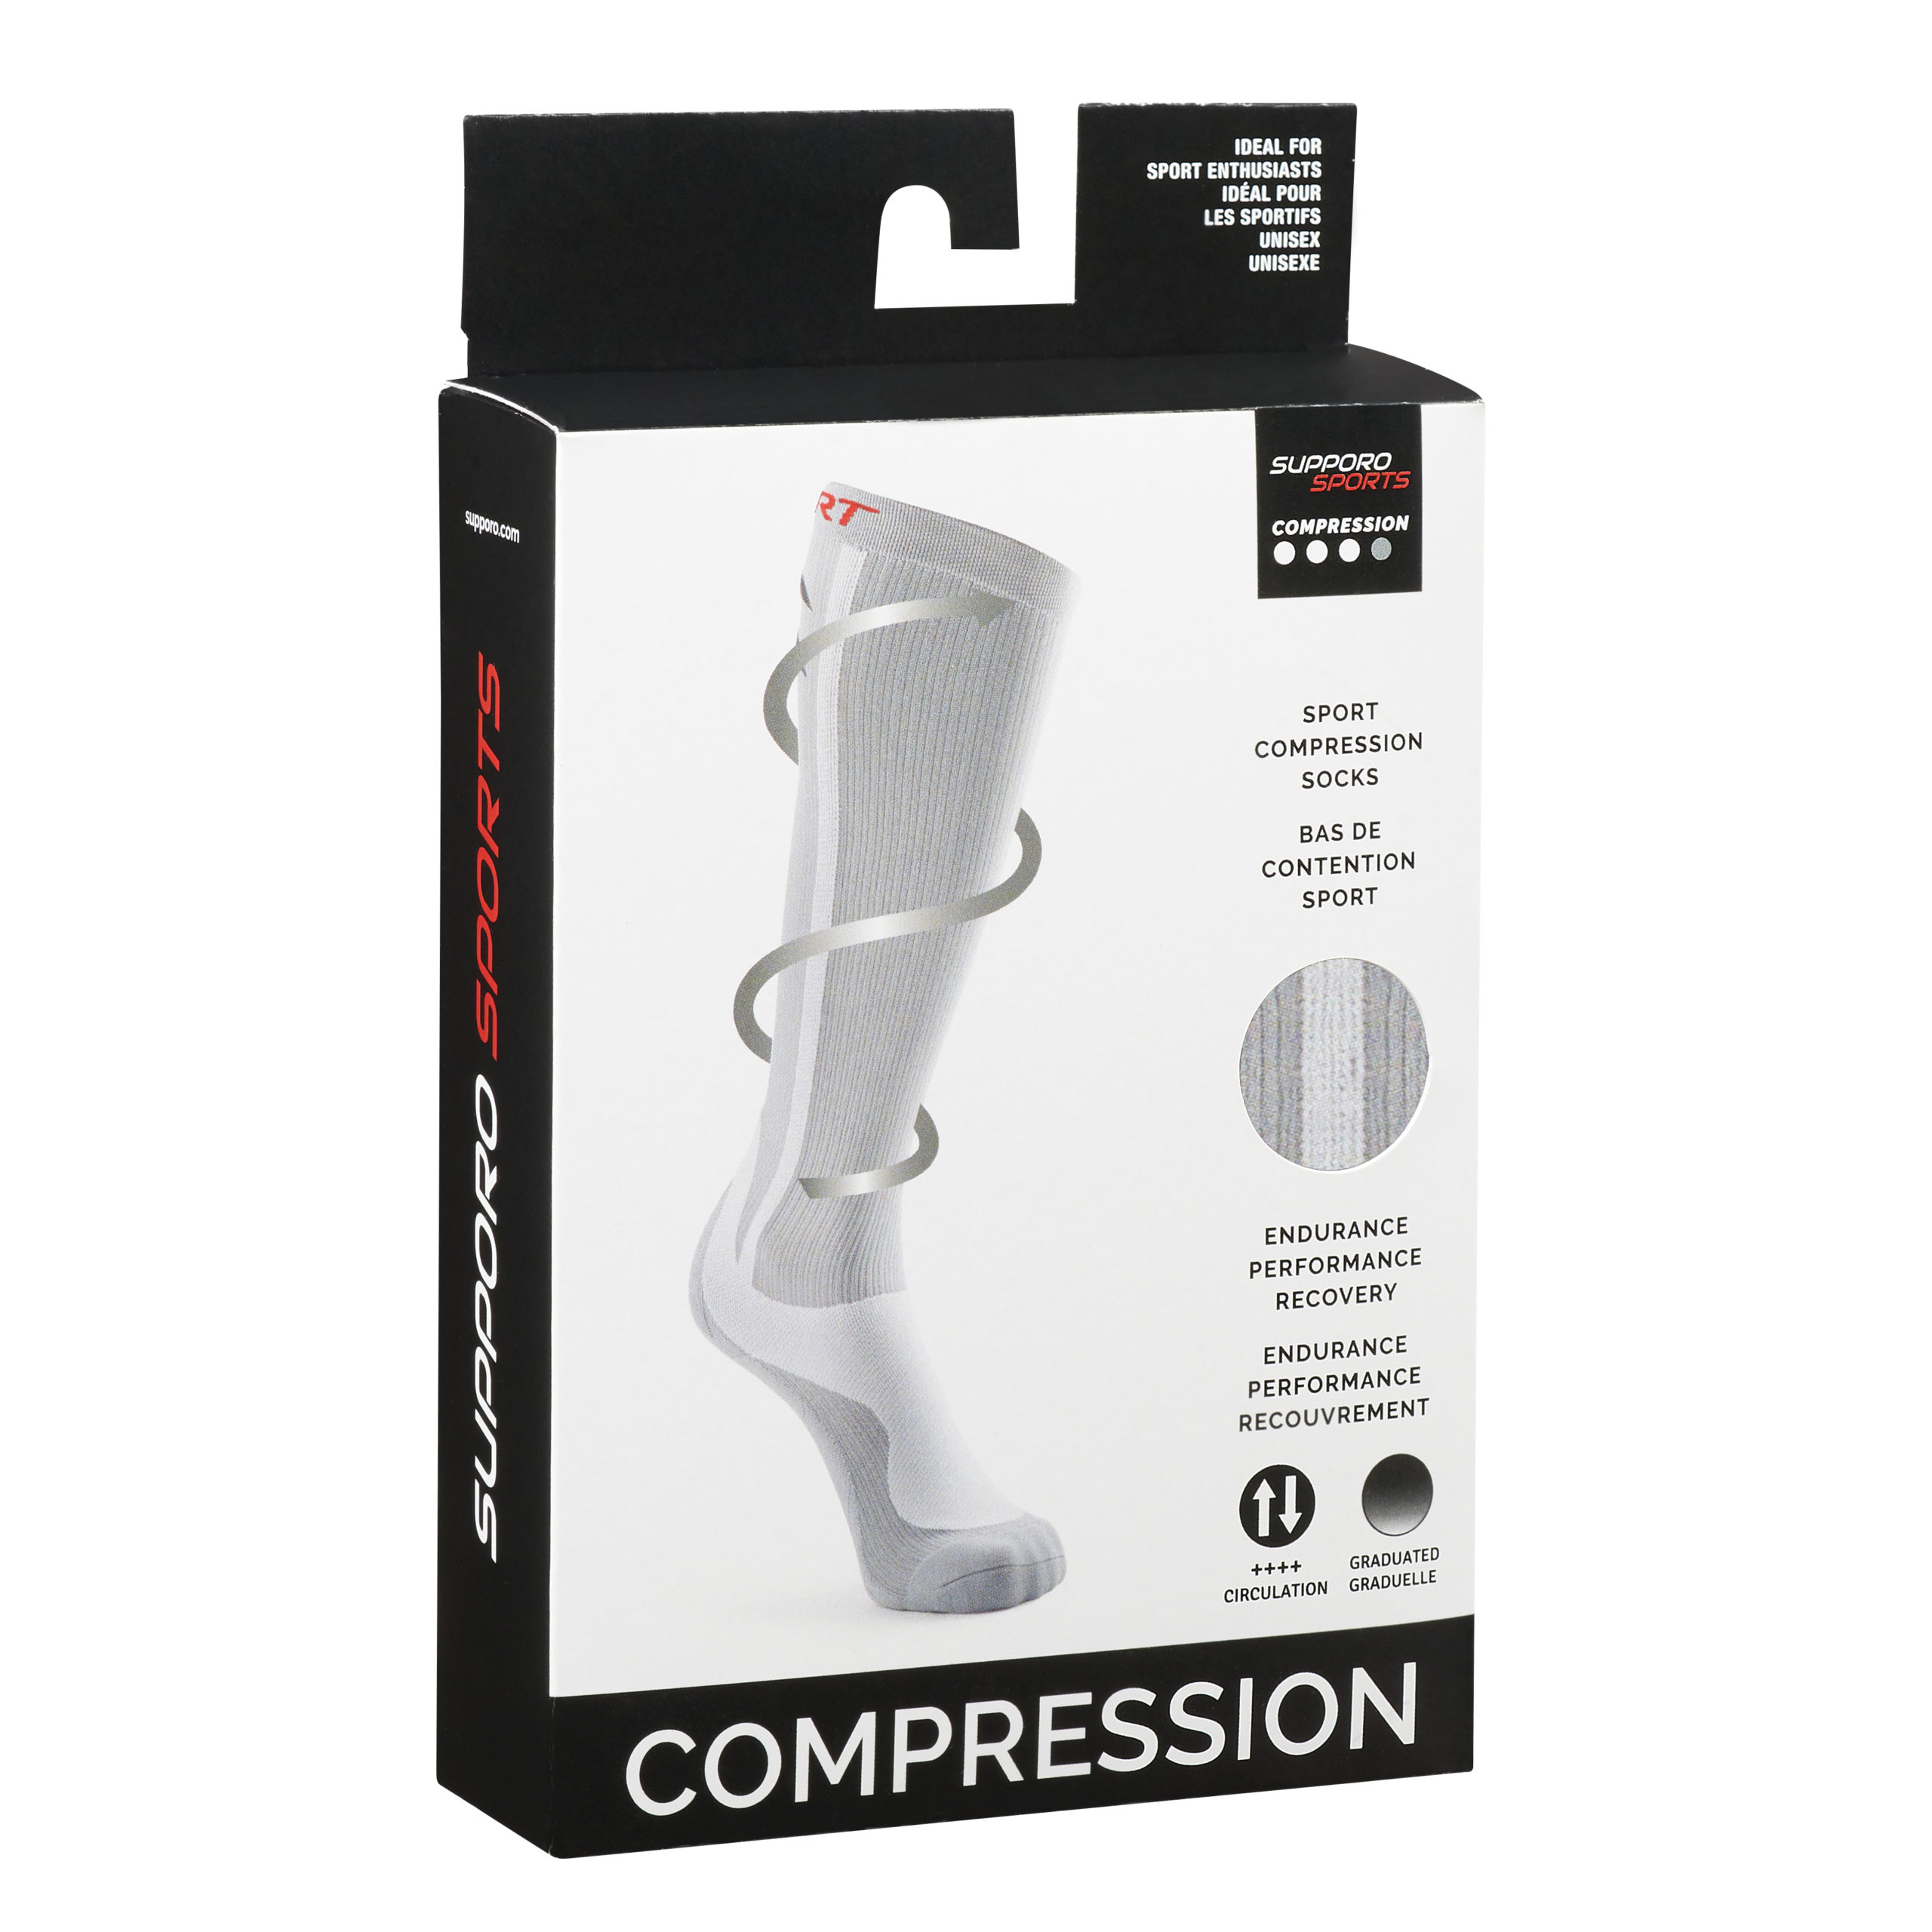 Unisex compression socks